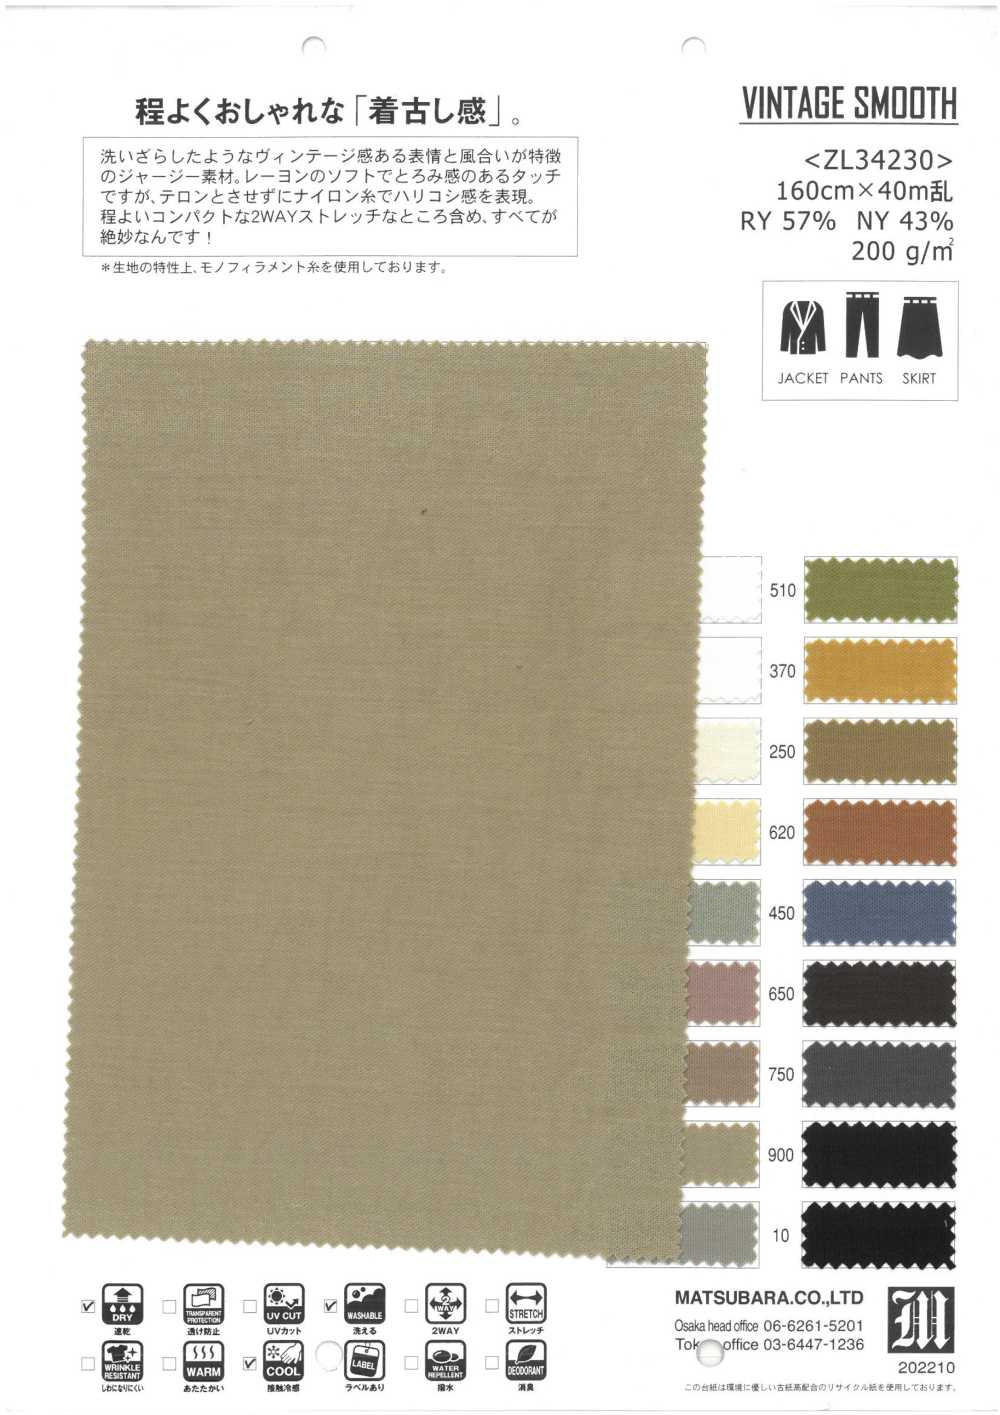 ZL34230 VINTAGE SMOOTH[Textile / Fabric] Matsubara